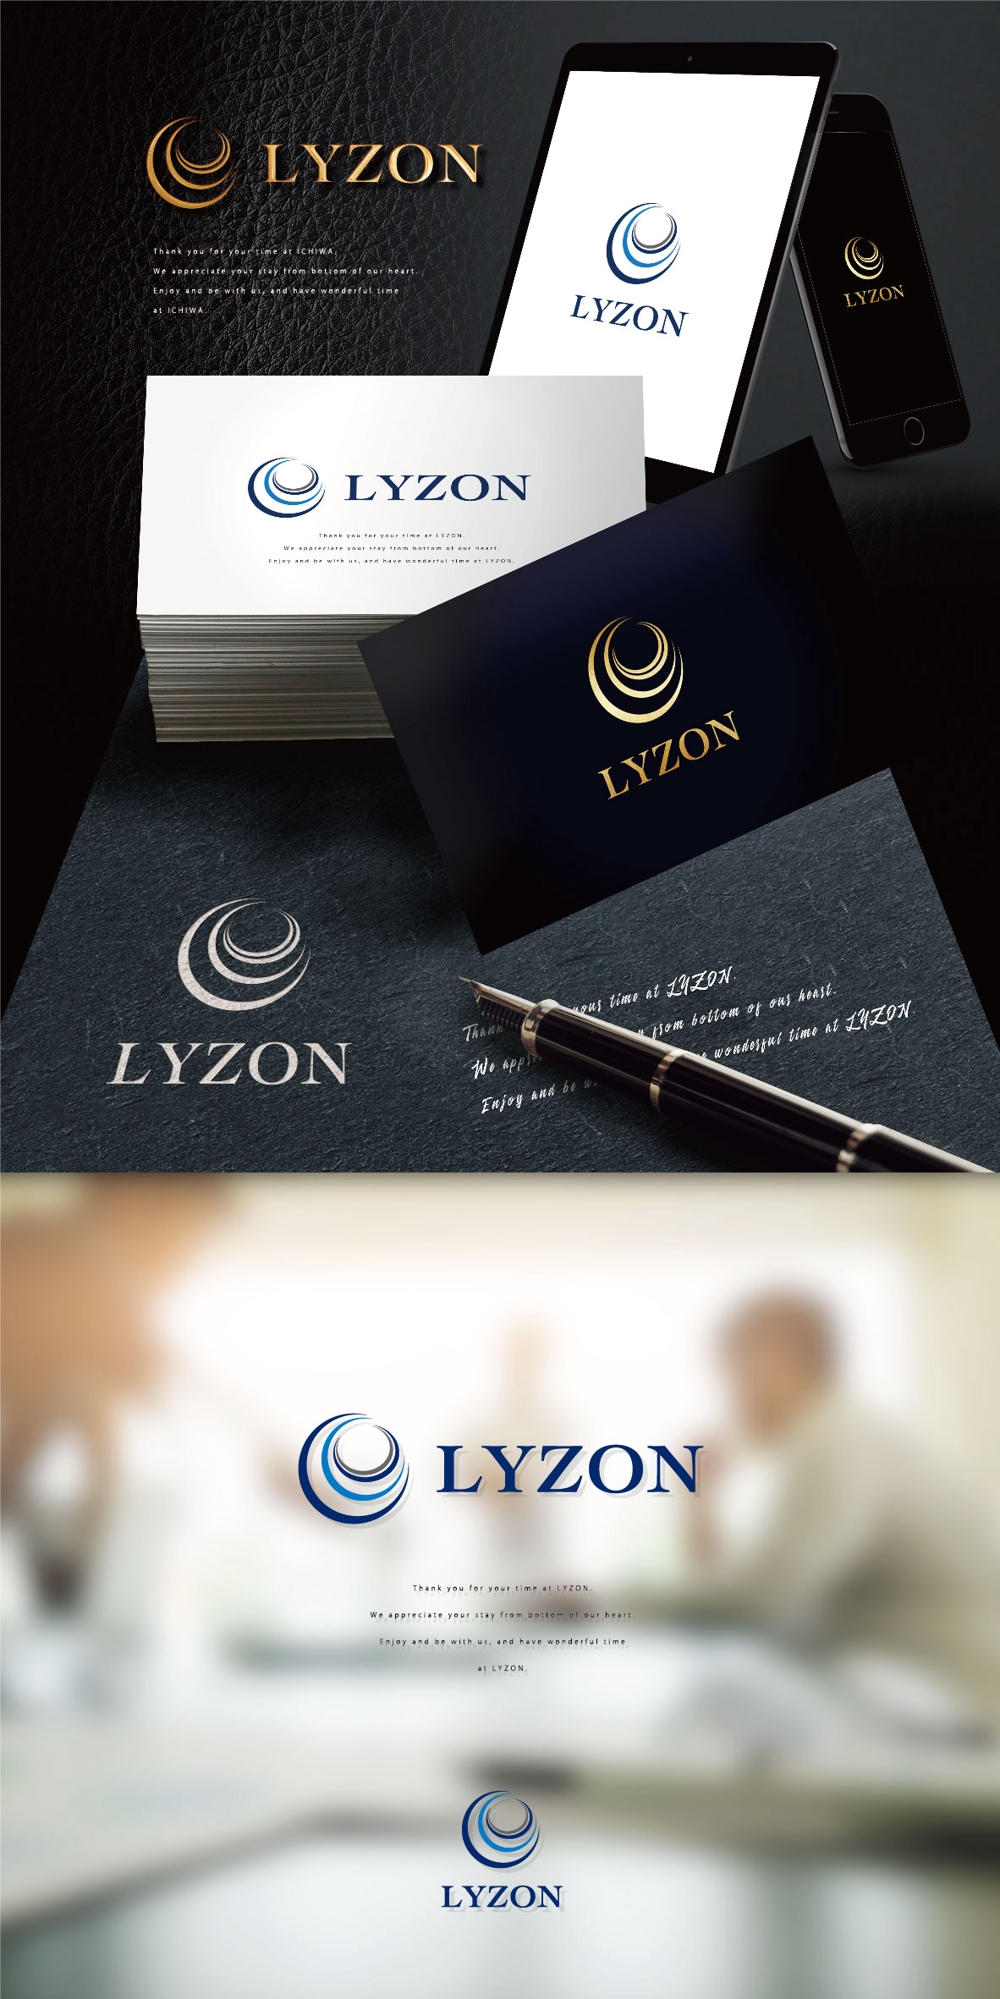 LYZON-04.jpg